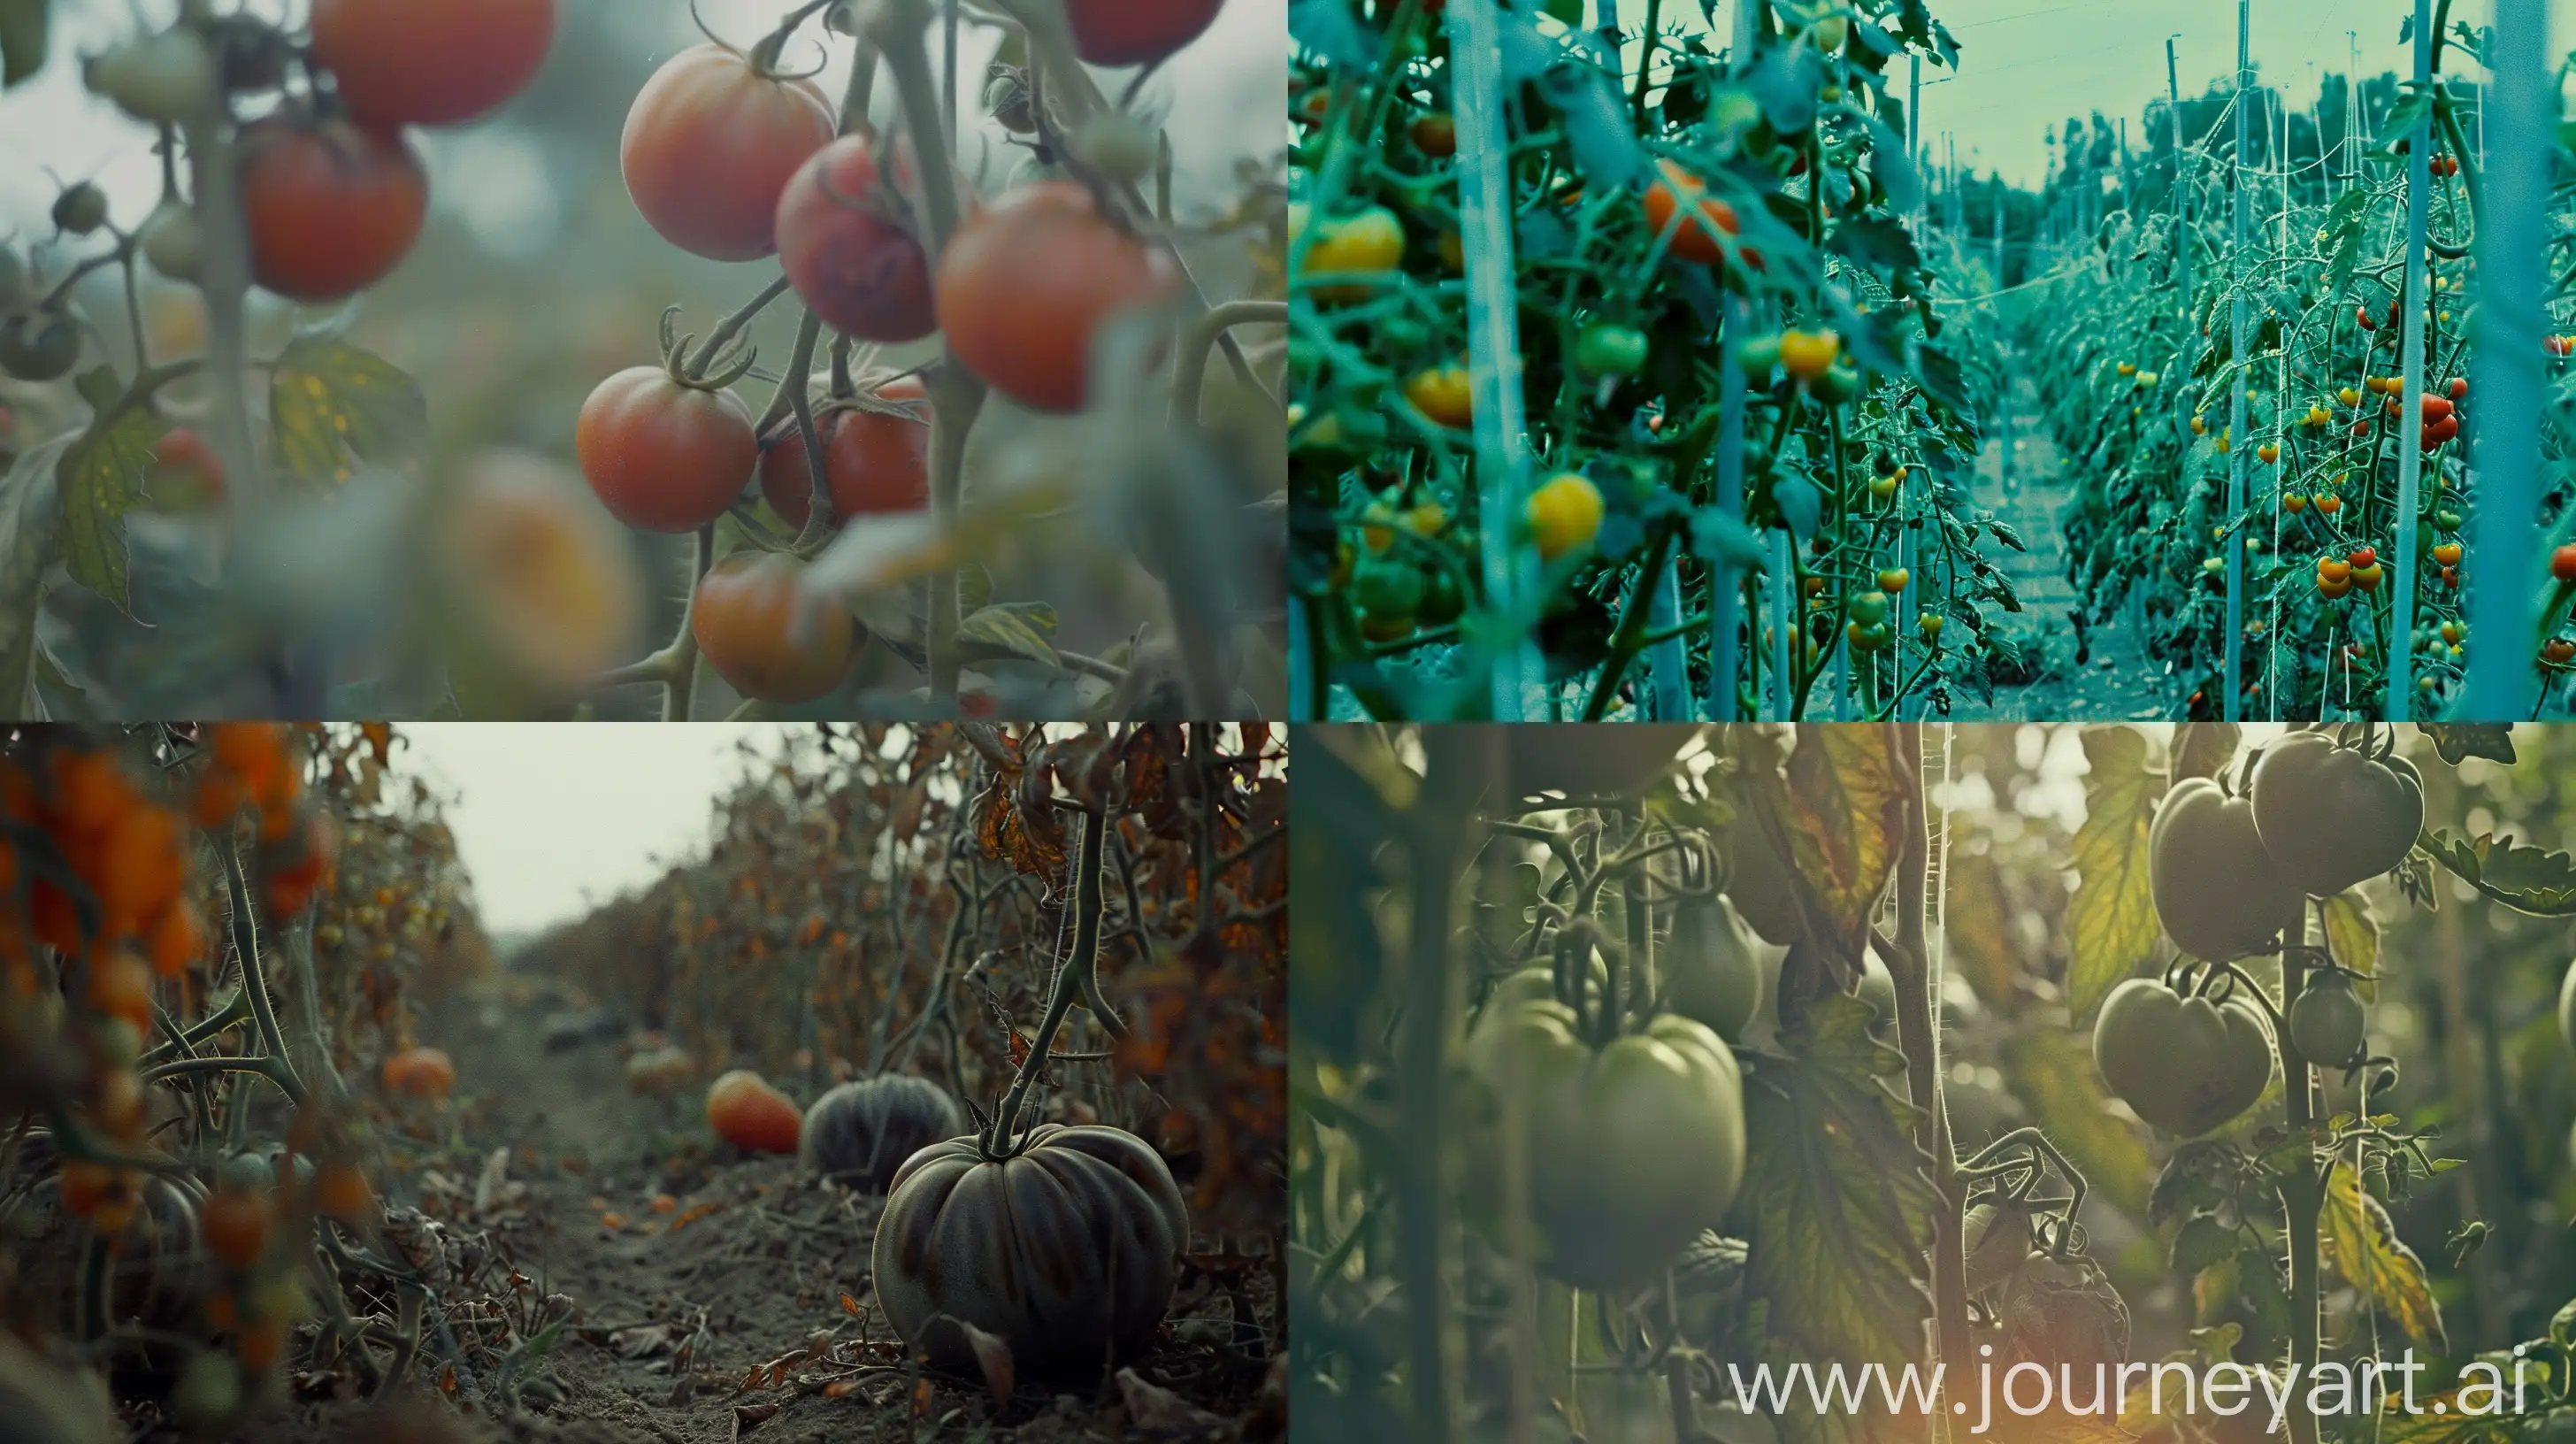 Vibrant-Tomato-Harvest-in-Expansive-Farm-Field-under-Soft-Daylight